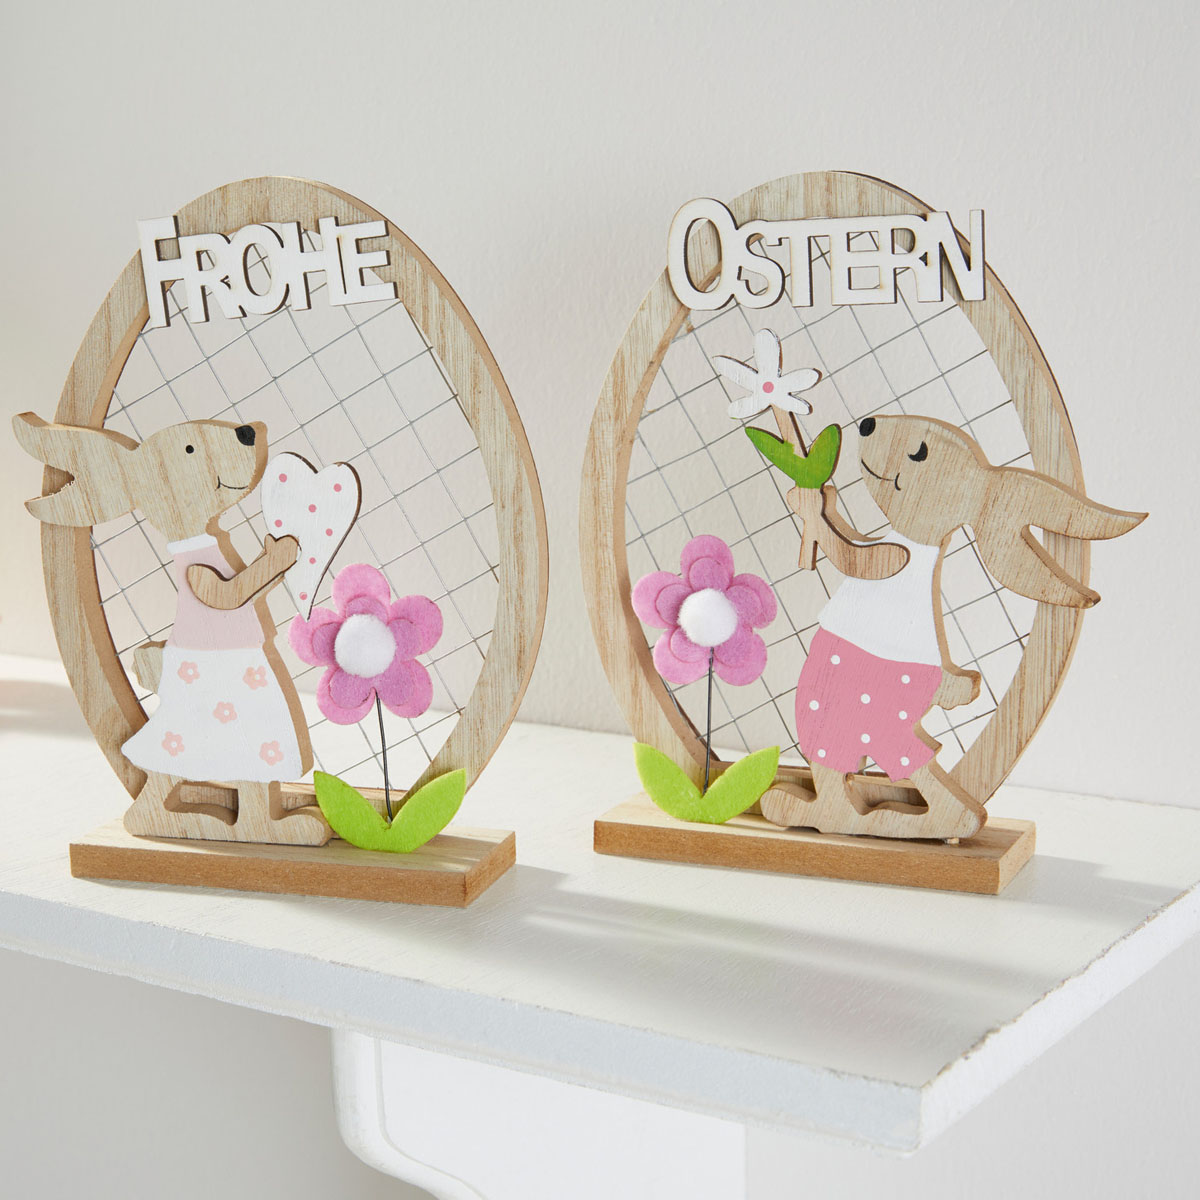 Декоративные фигуры "Frohe Ostern", 2 штуки [08732], 